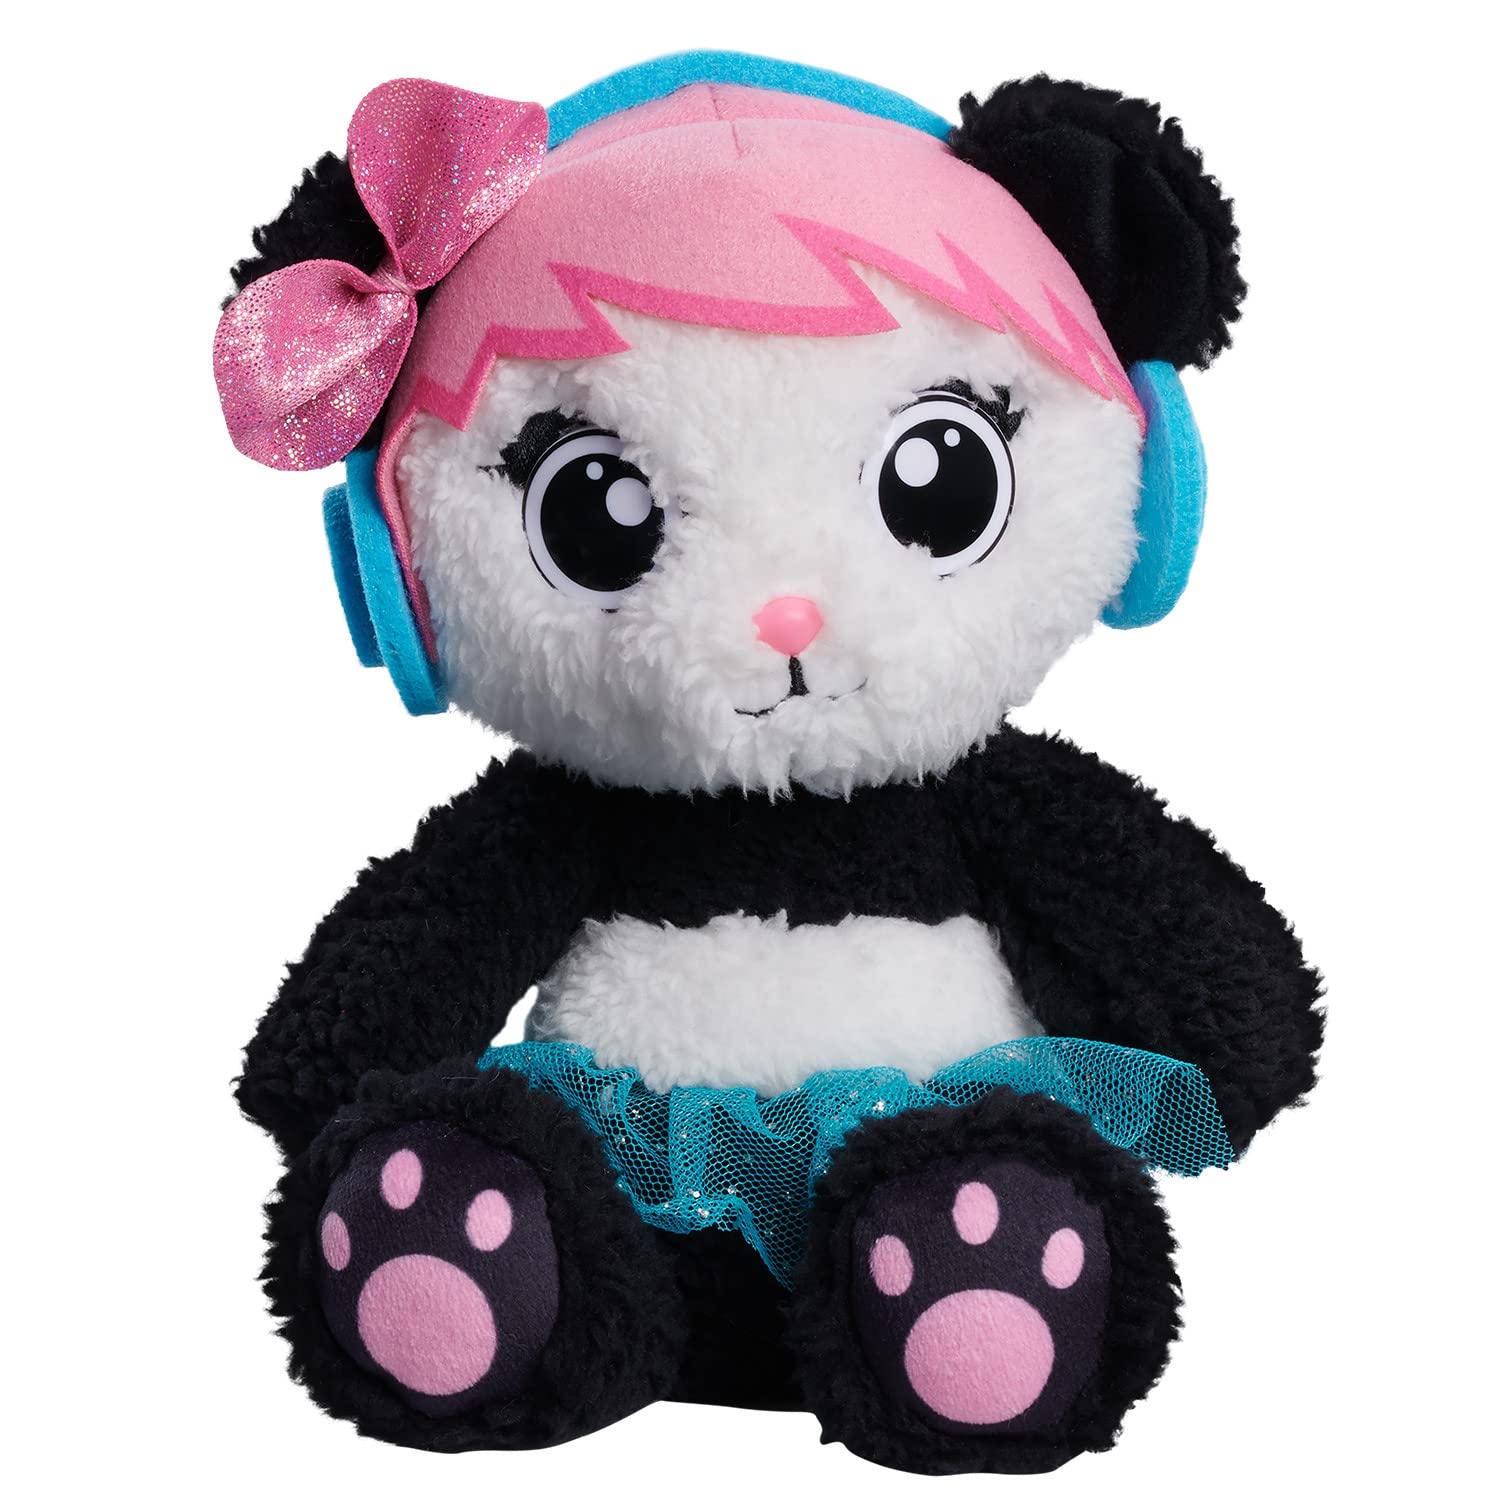 EK World Combo Panda's Sister Coco Plush Toy 7" $5.05 + Free Ship w/Prime